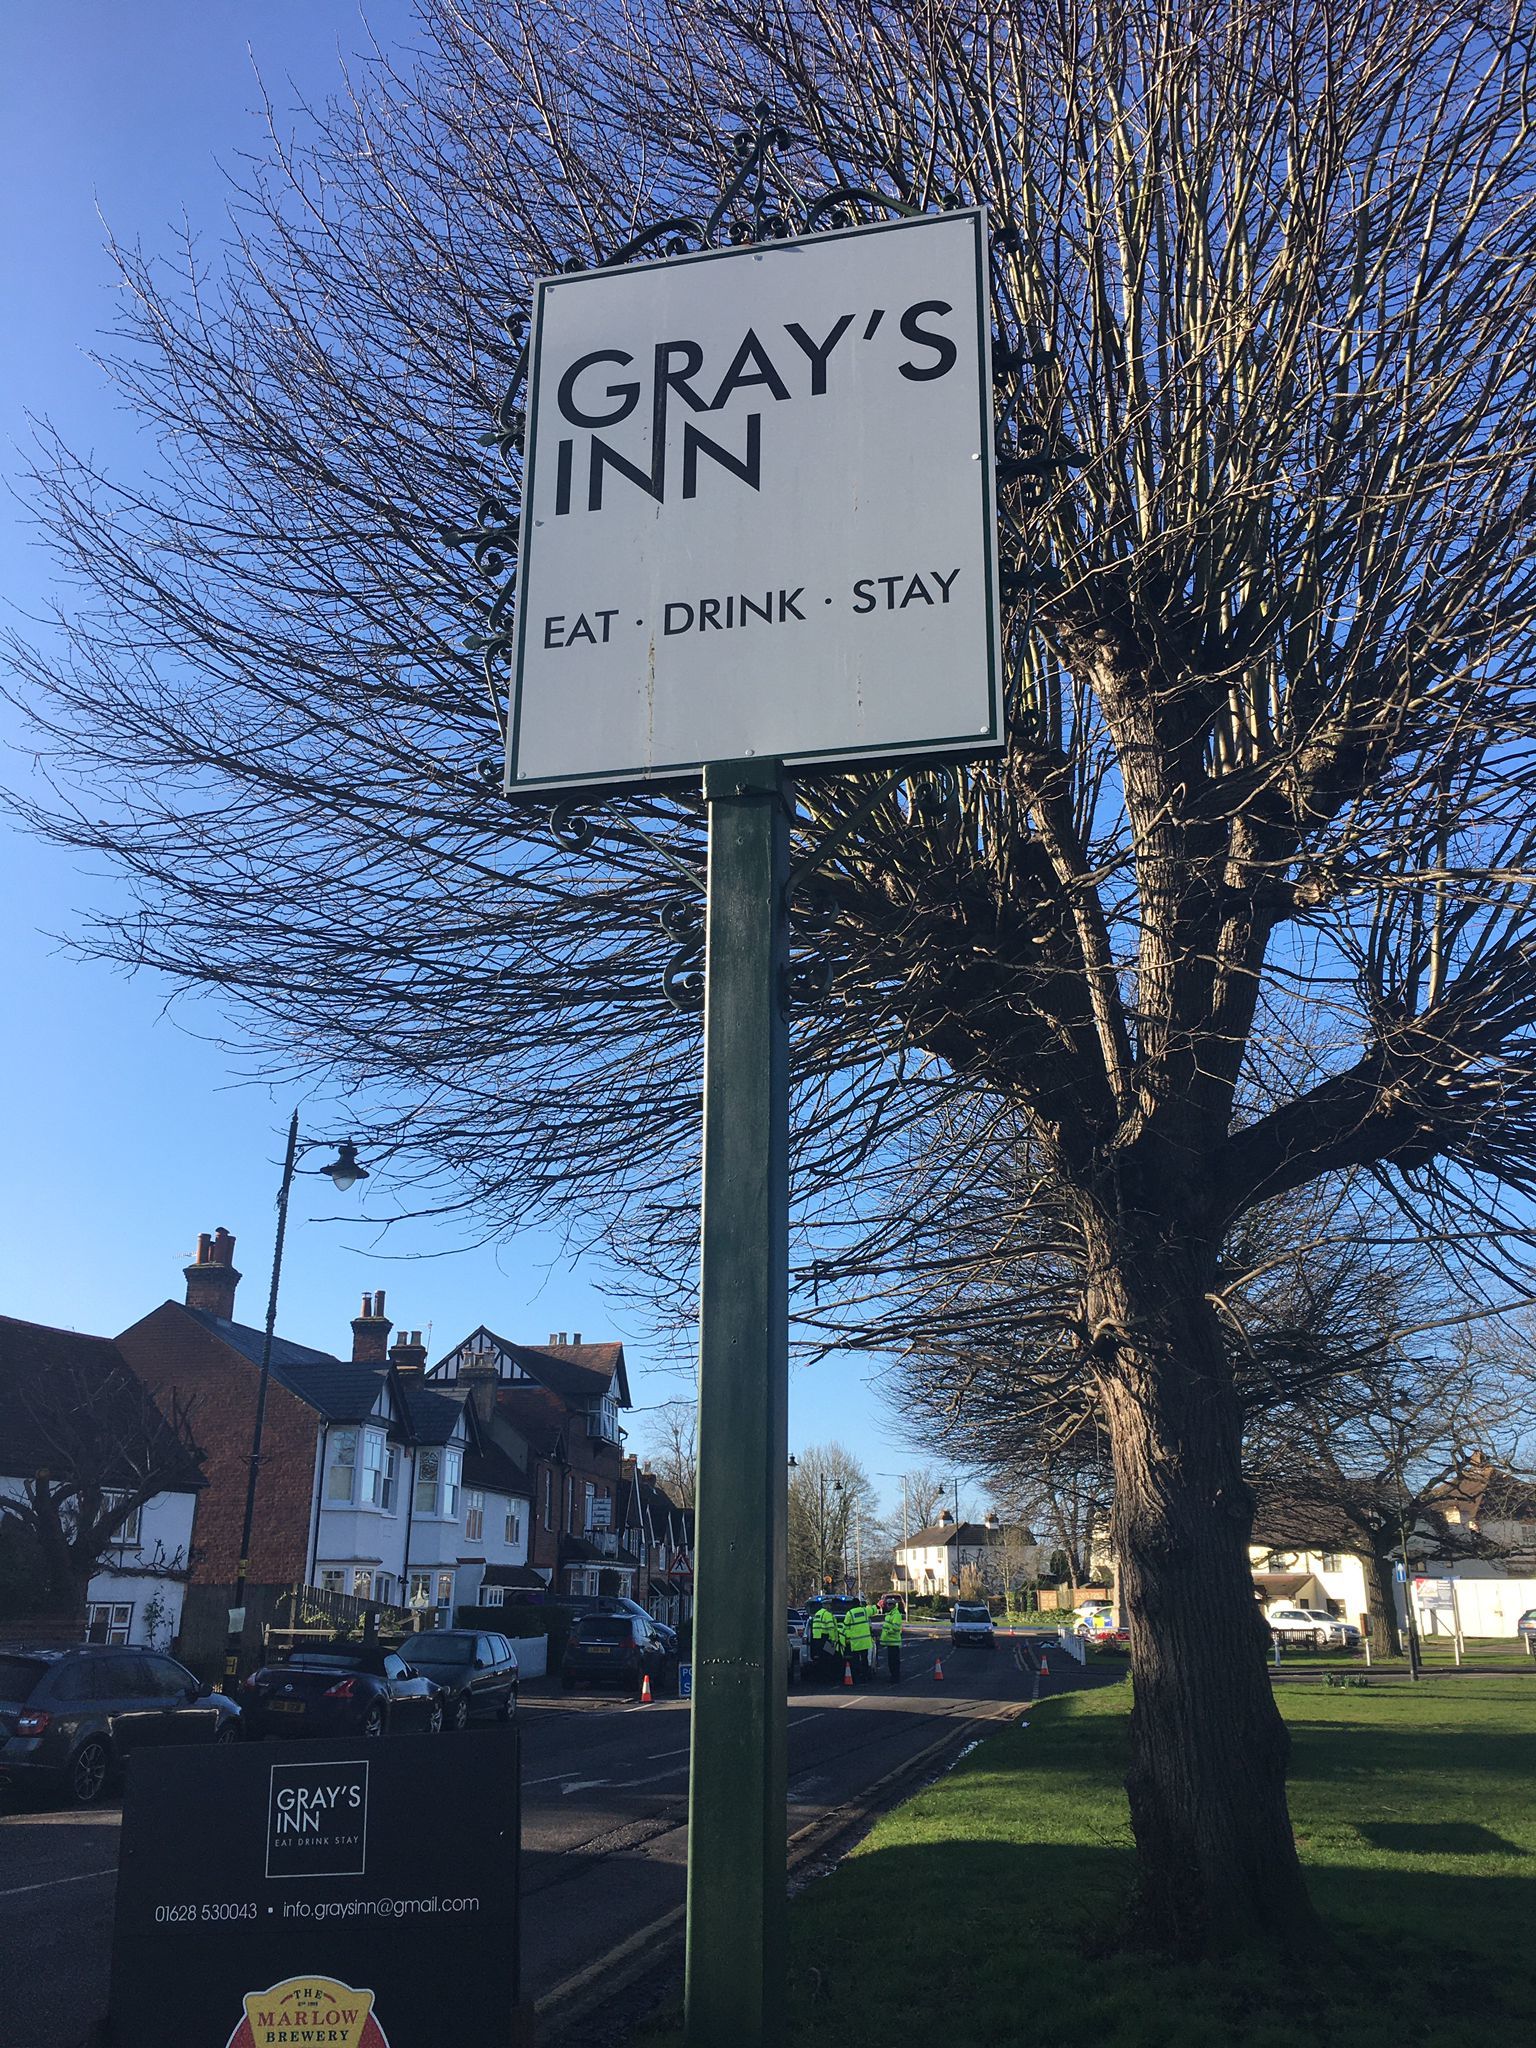 It happened near the Grays Inn in Wooburn Green